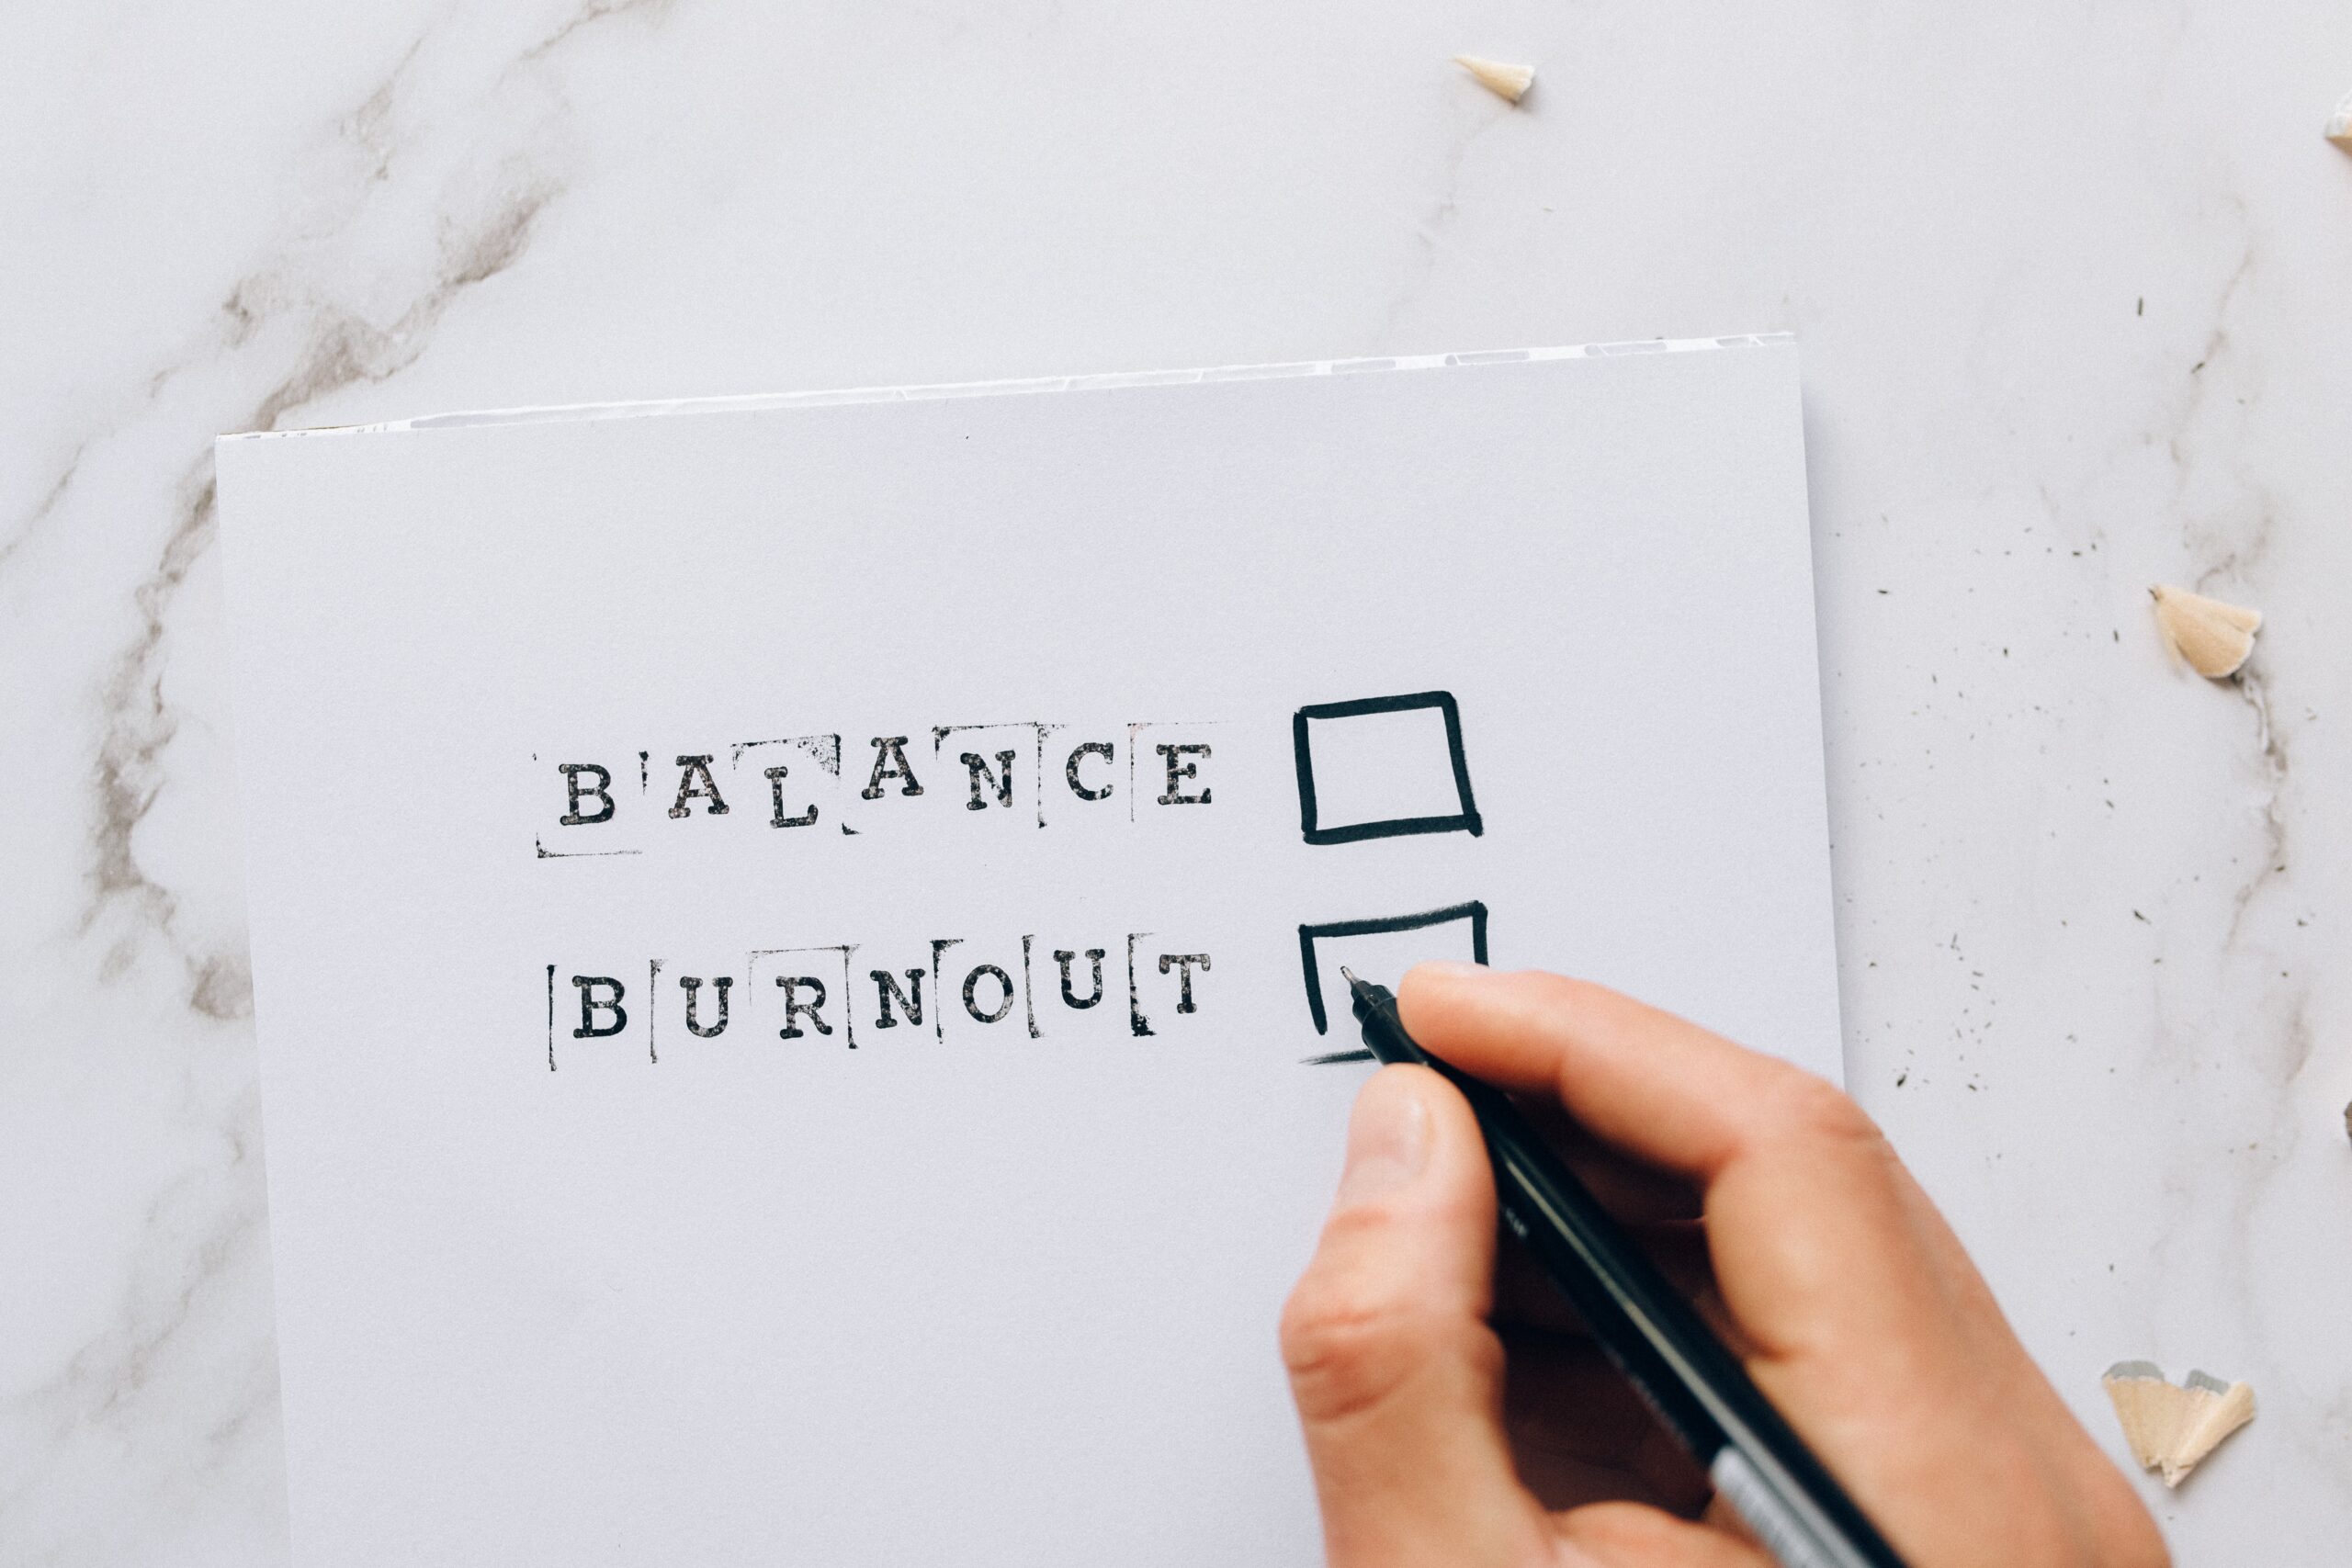 How do I avoid burnout in the long run?